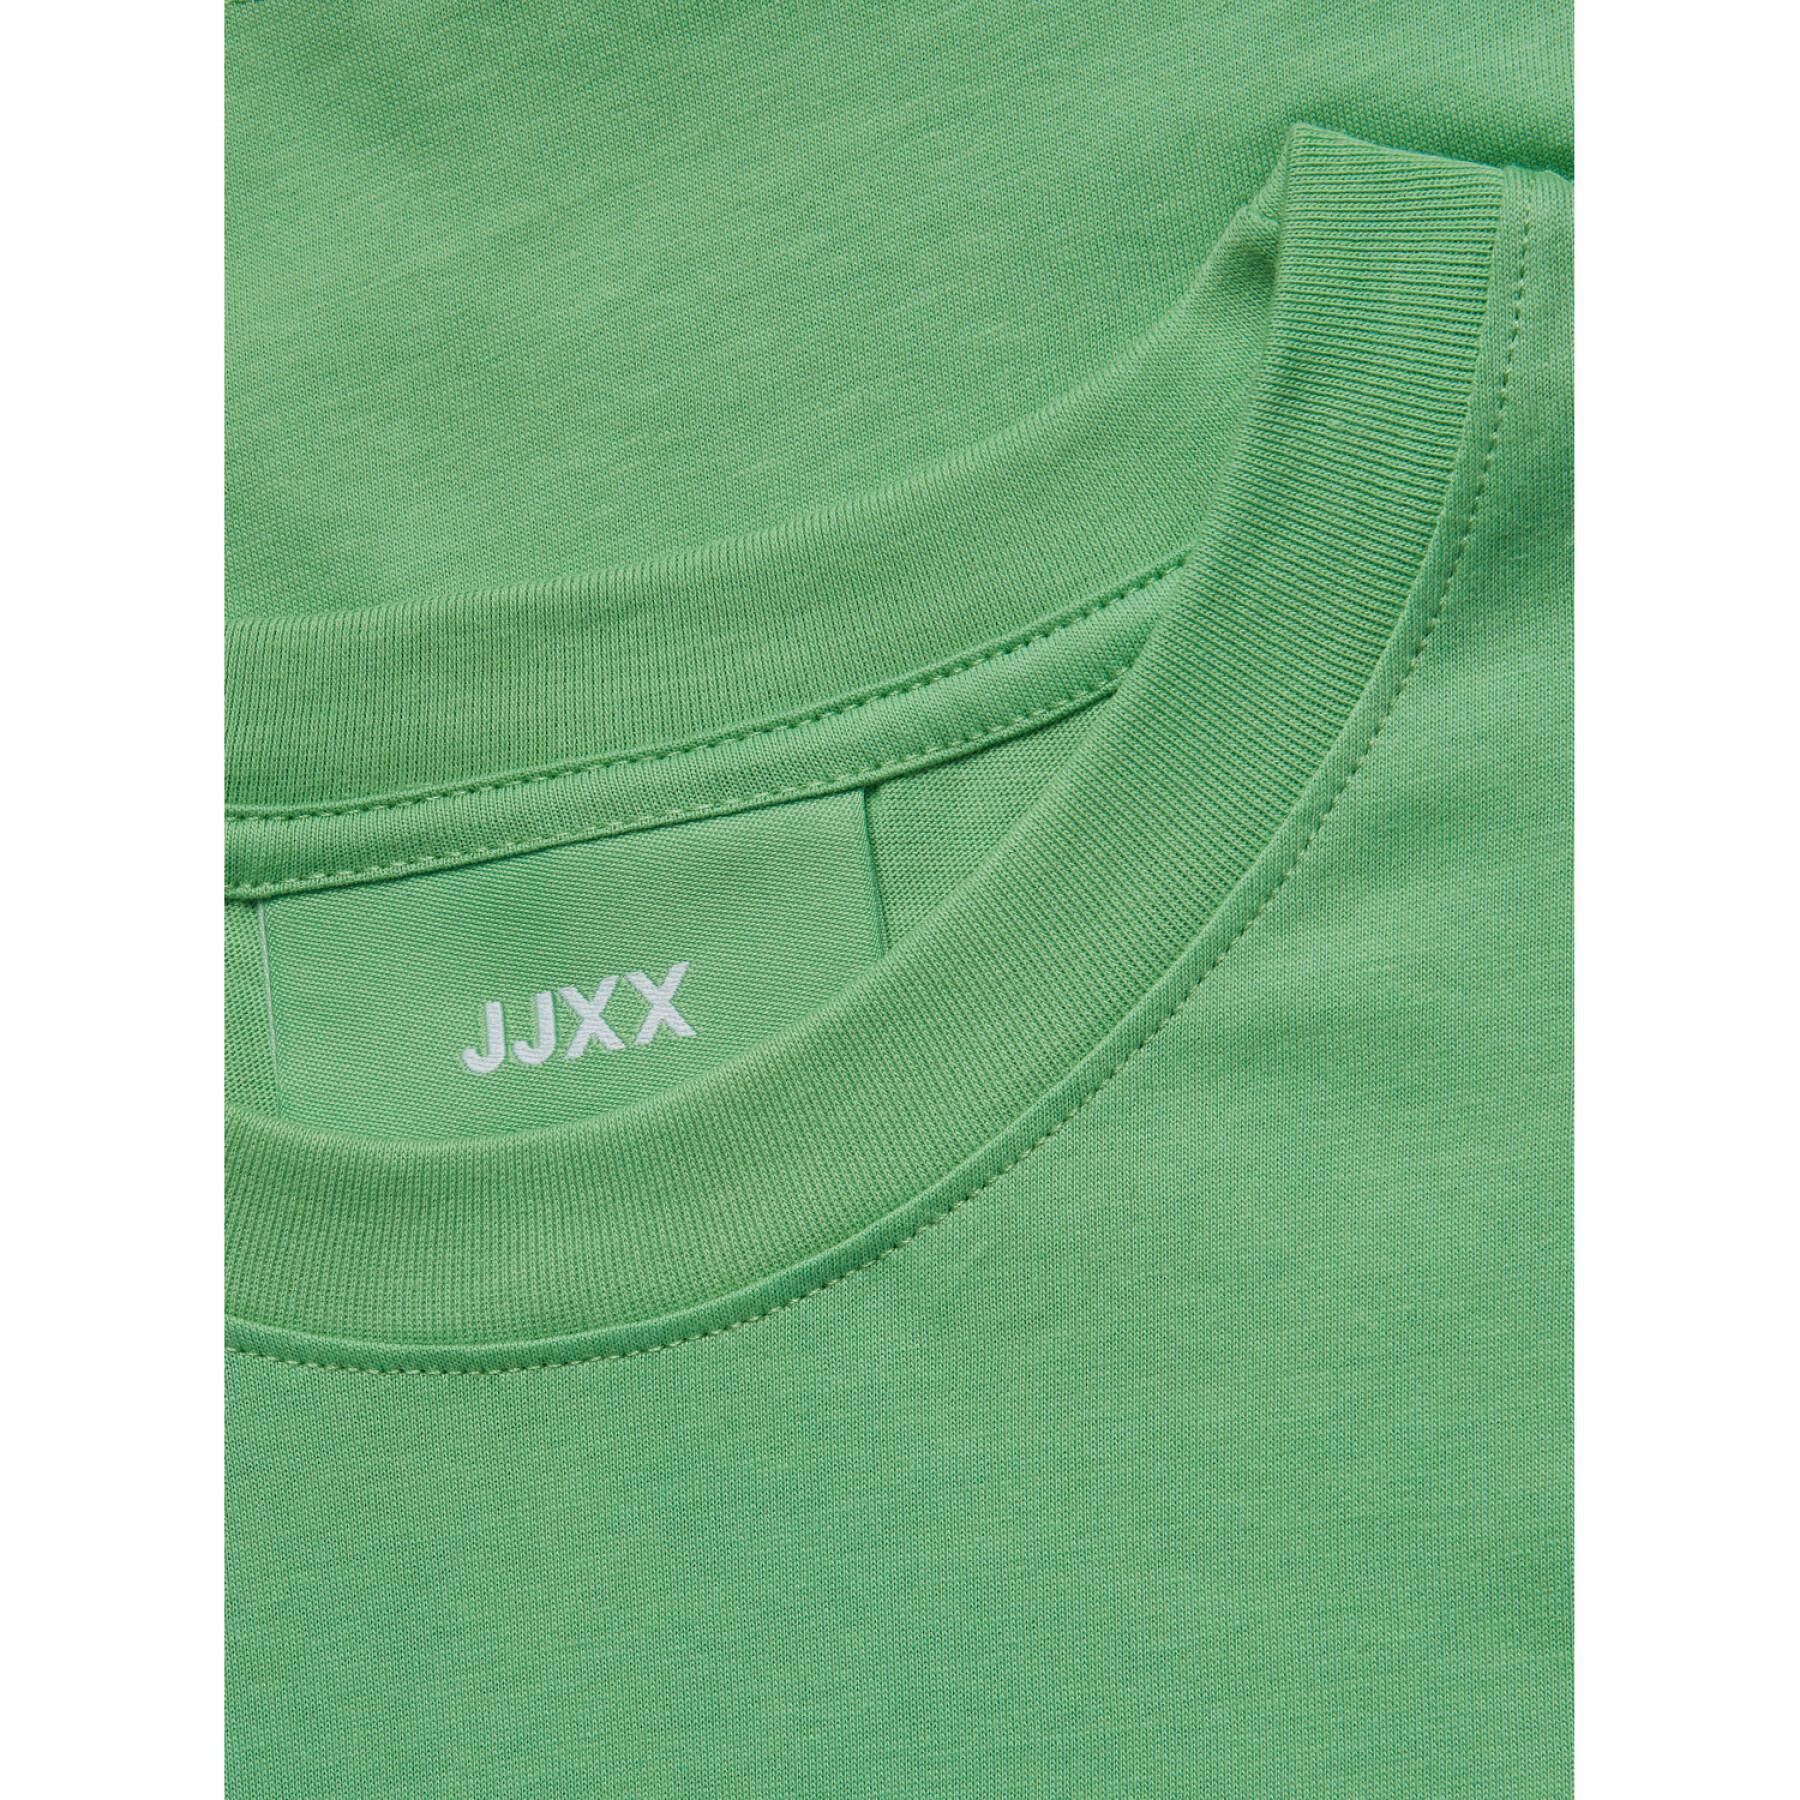 T-shirt donna logo grande JJXX Anna Reg